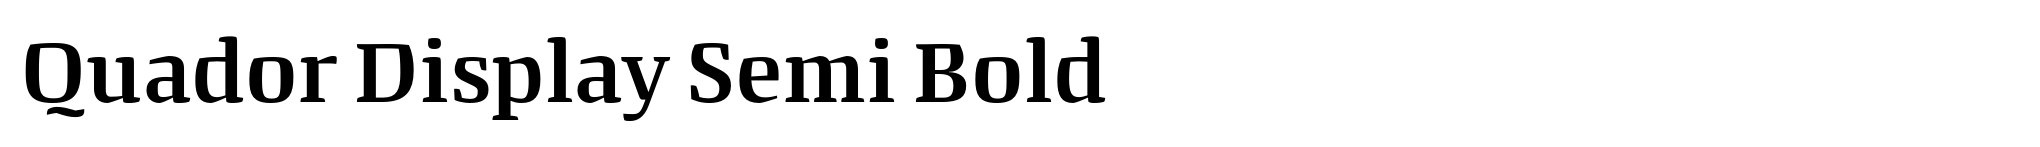 Quador Display Semi Bold image